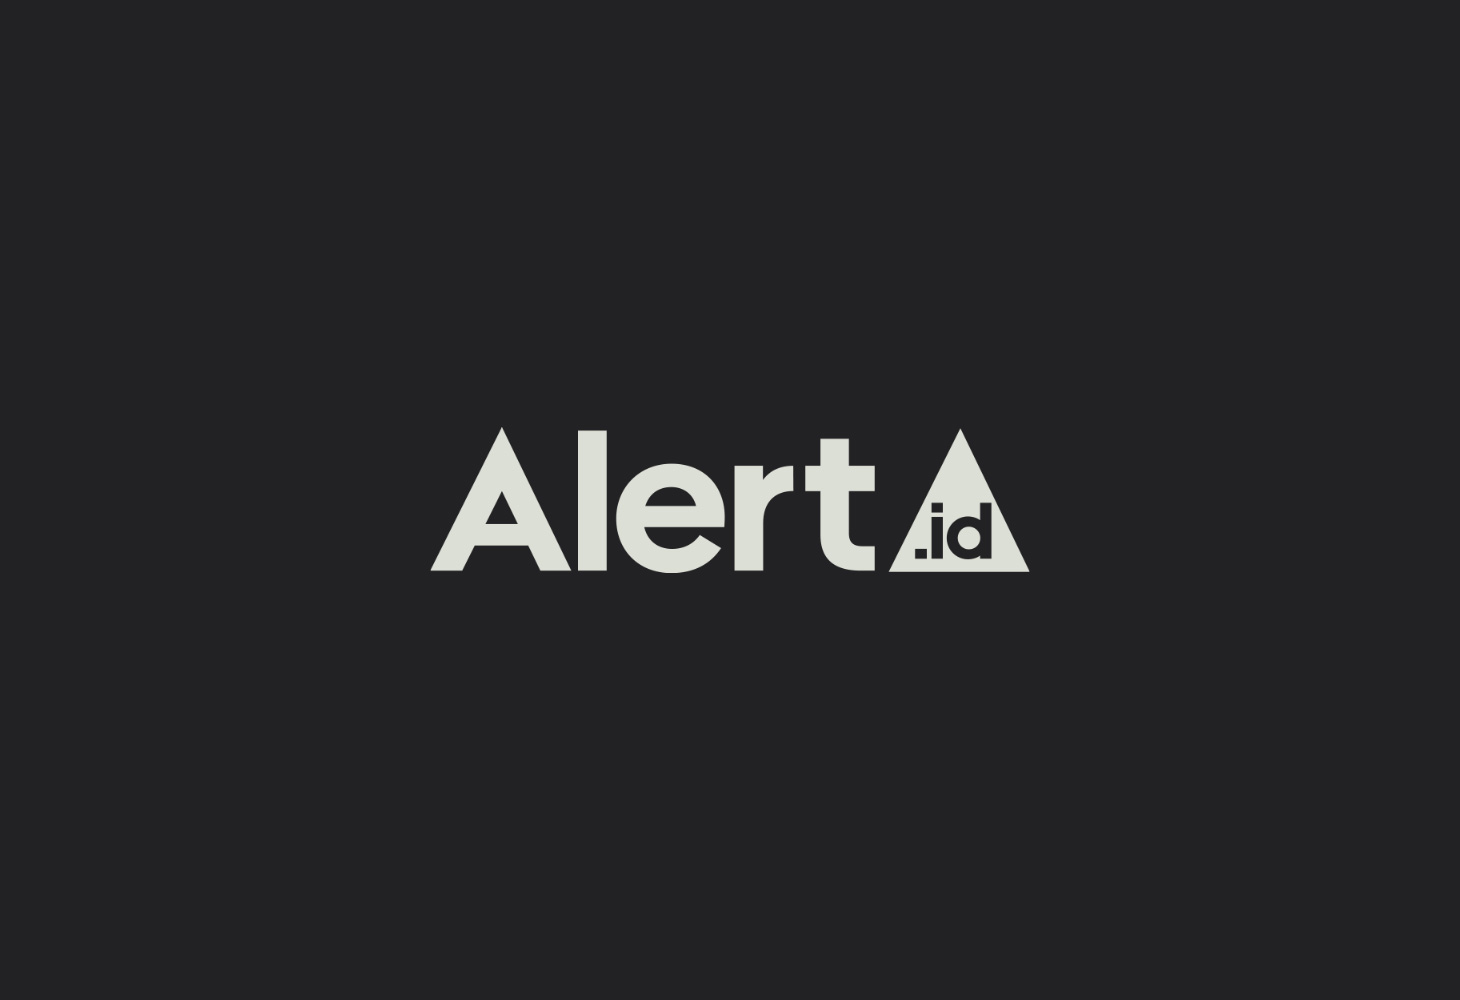 Alert.id — Logotype Wa version